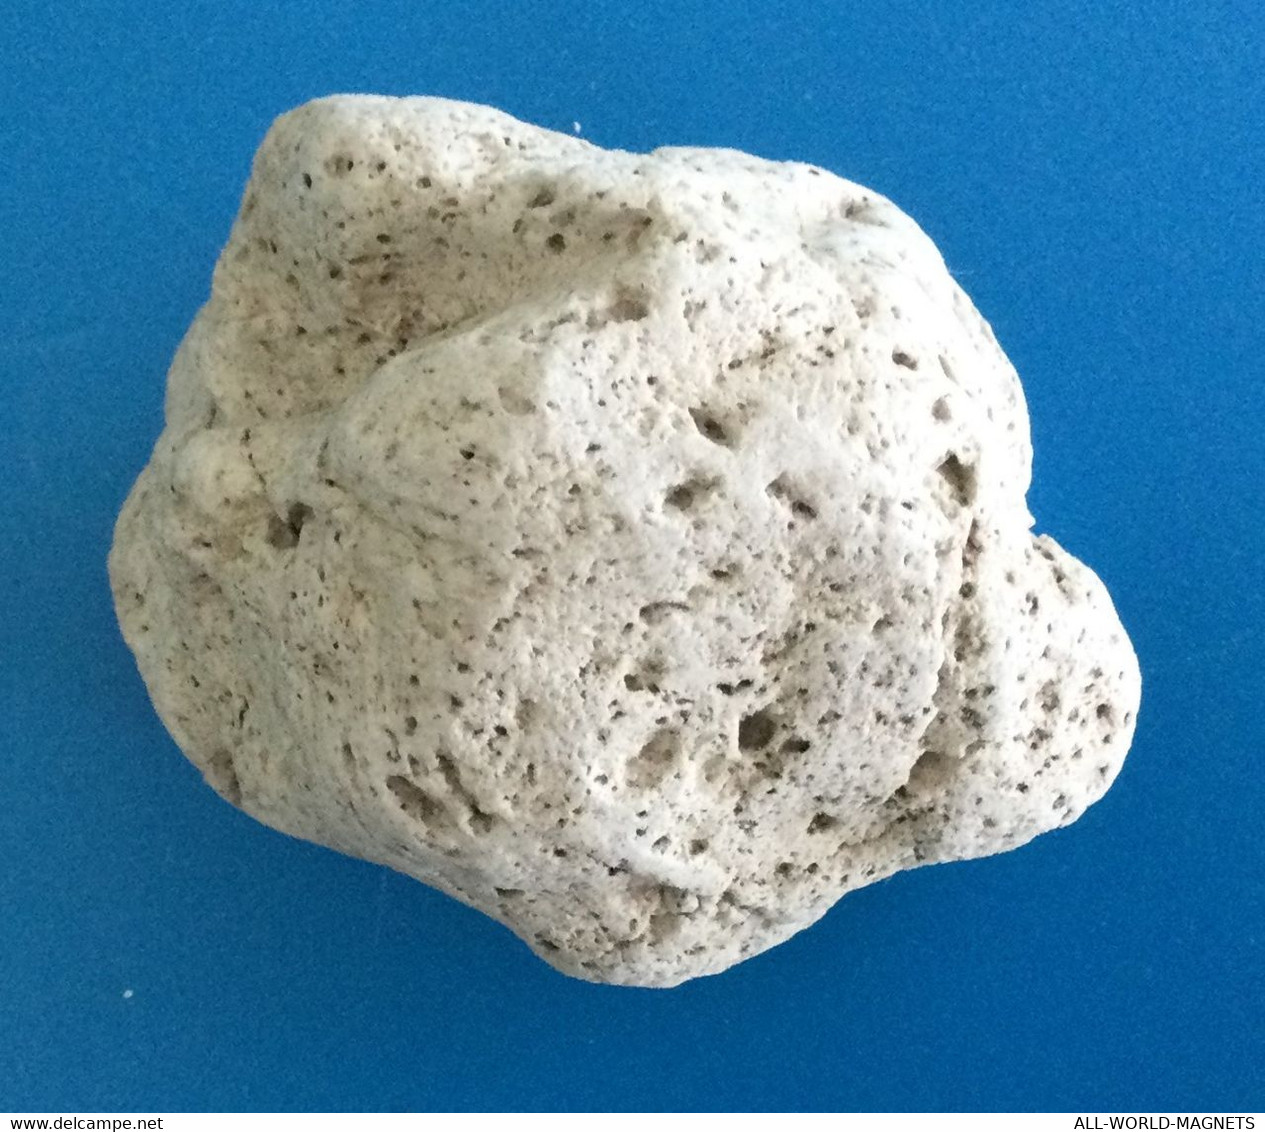 Pumice Stone from Black Beach of Santorini Thera Island Greece, 19 g